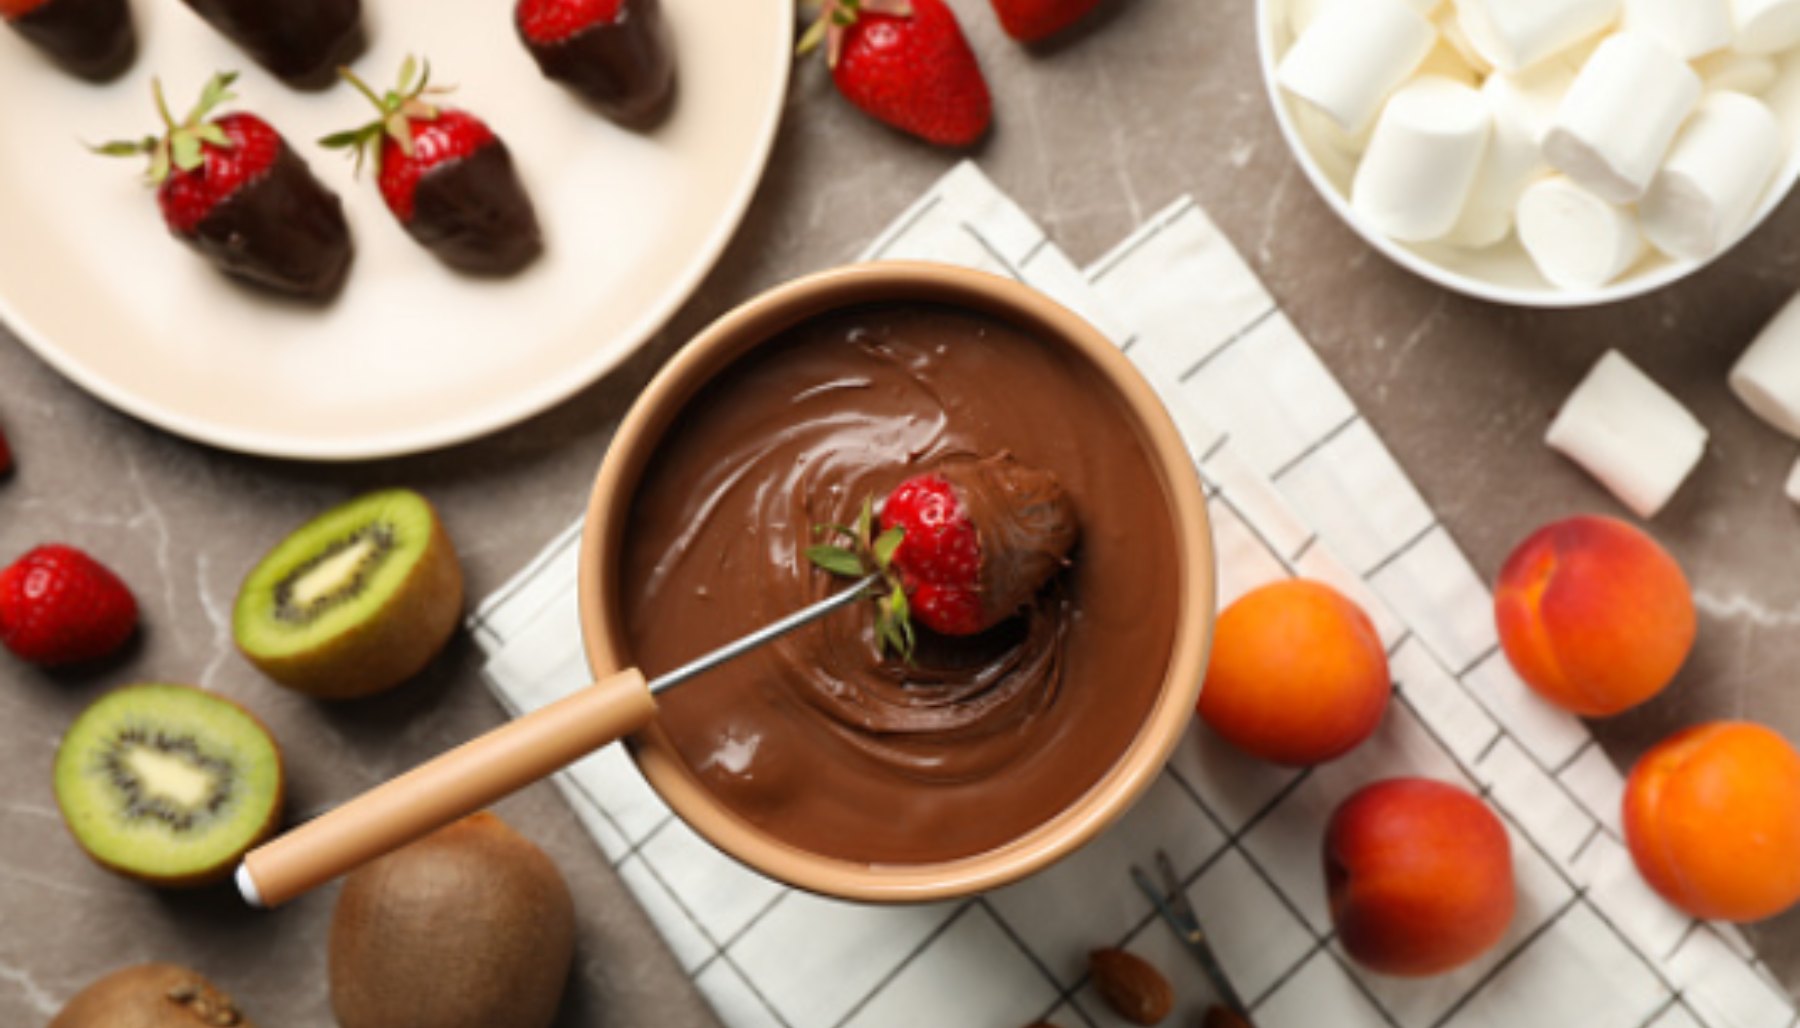 compartir Autonomía exagerar Receta de Fondue de chocolate: Una receta, mil posibilidades